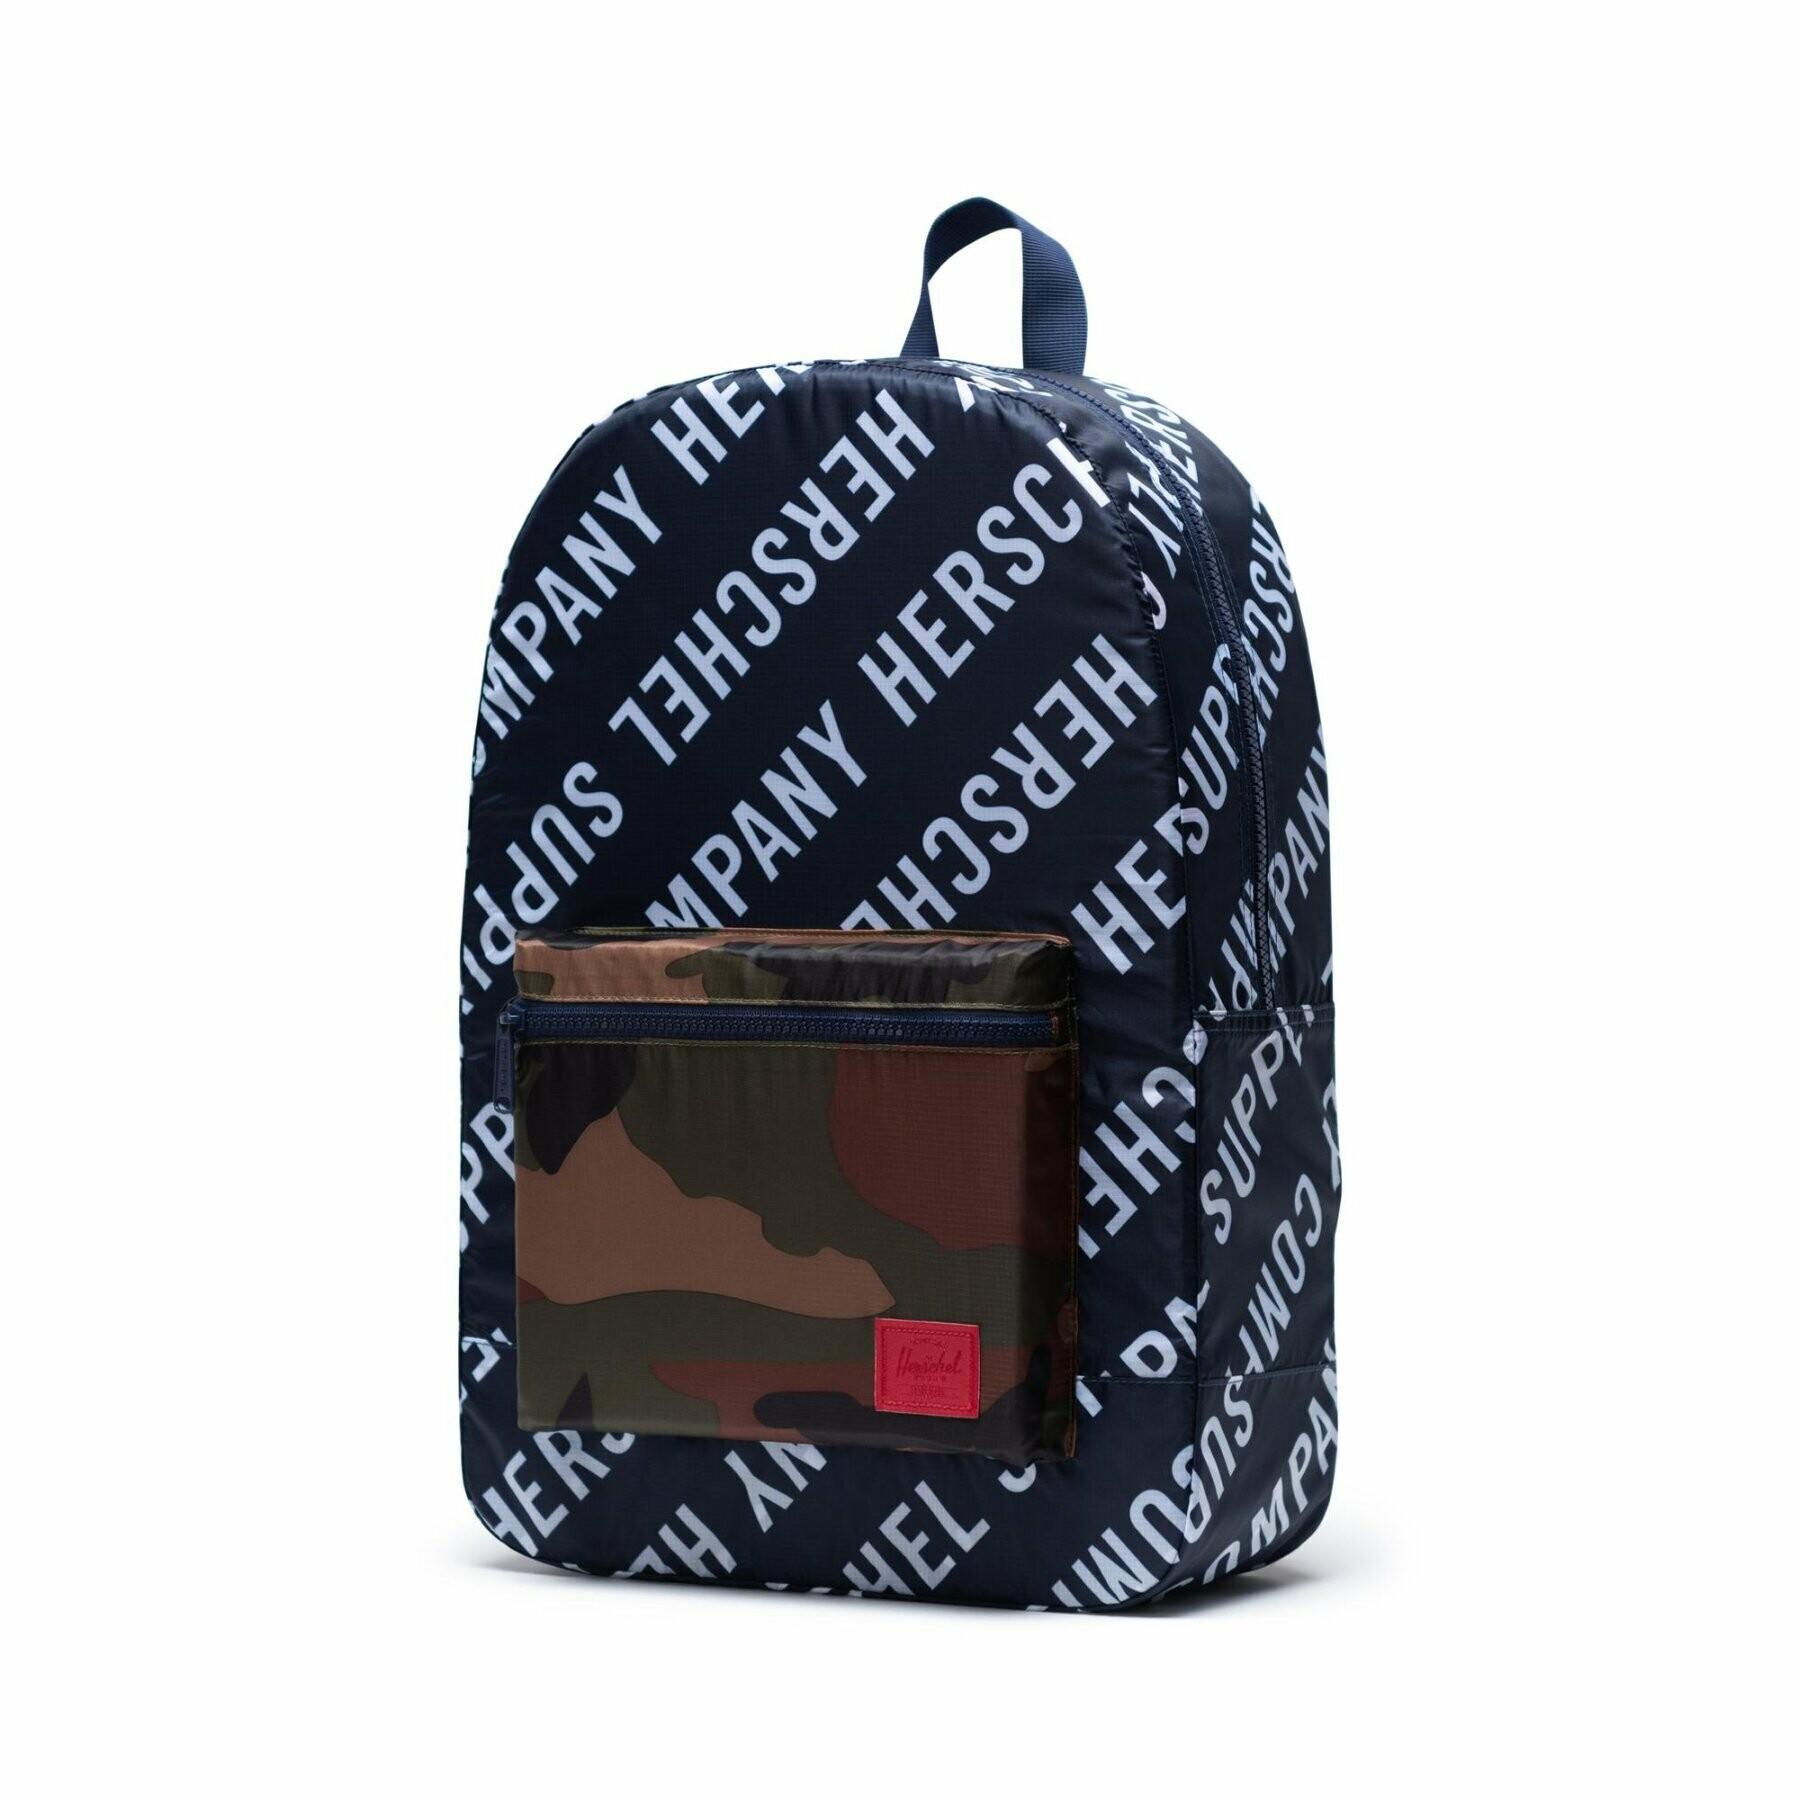 Backpack Herschel roll call peacoat/woodland camo